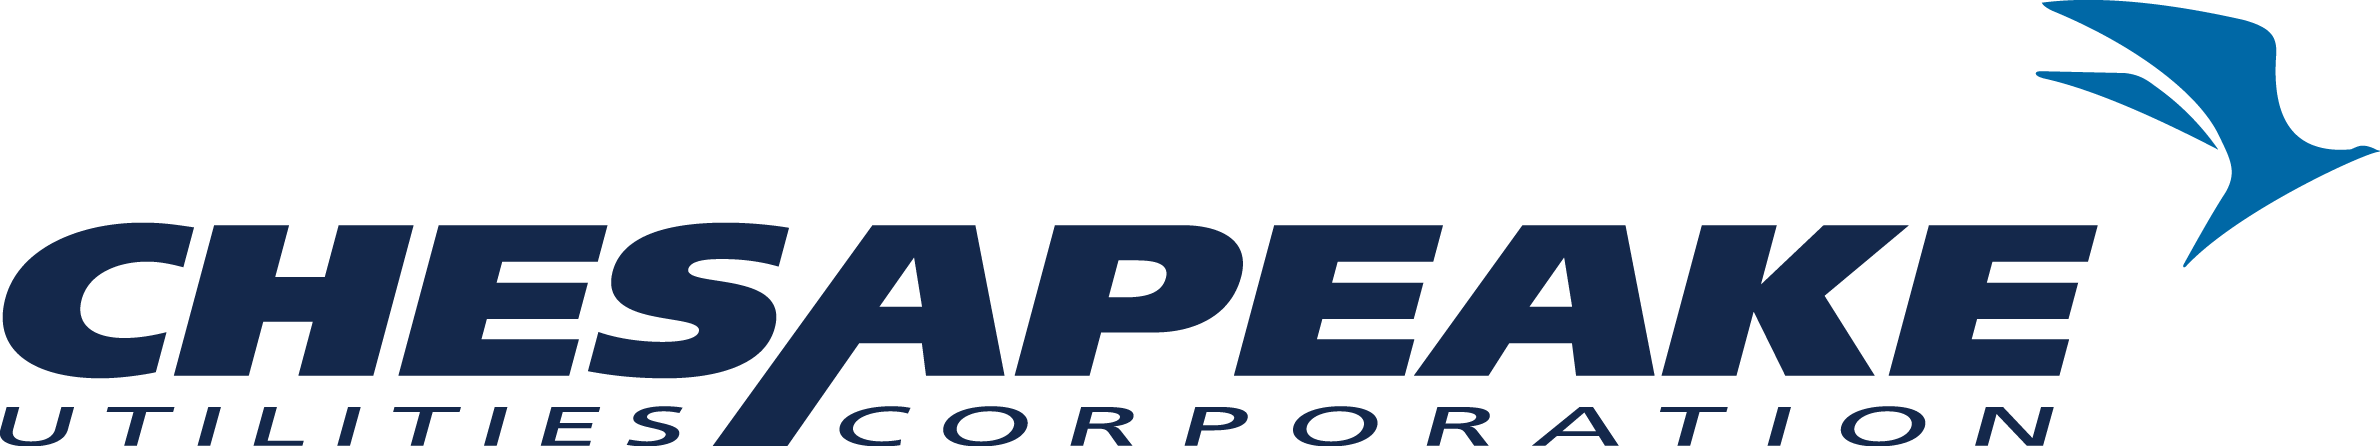 Chesapeake Utilities Corporation Company Logo